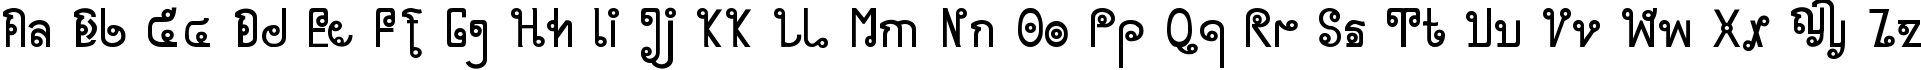 Пример написания английского алфавита шрифтом Cyclin